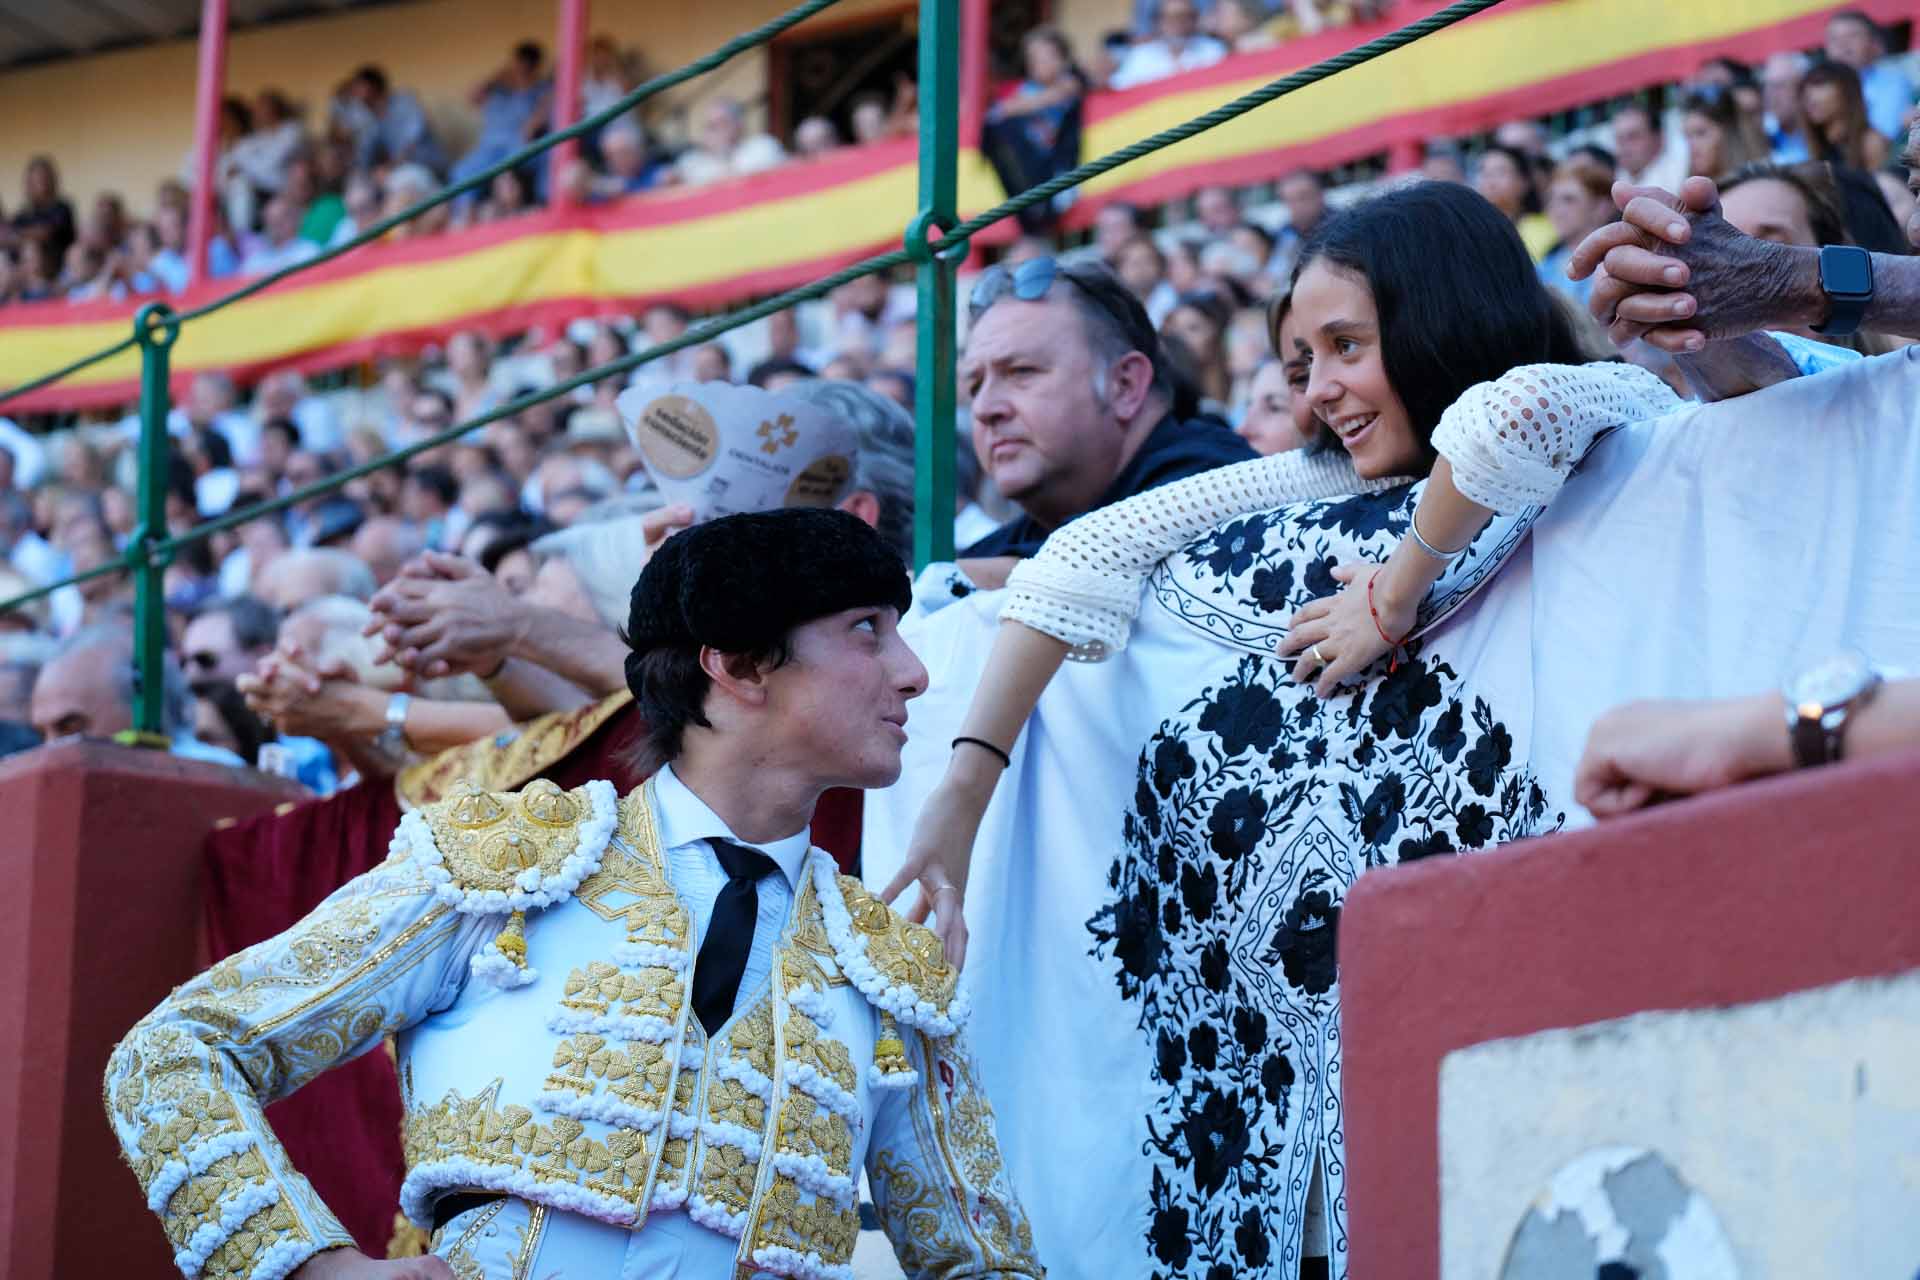 Bullfigh Andres Roca Rey and Victoria Federica de Marichalar during bullfighting in Valladolid